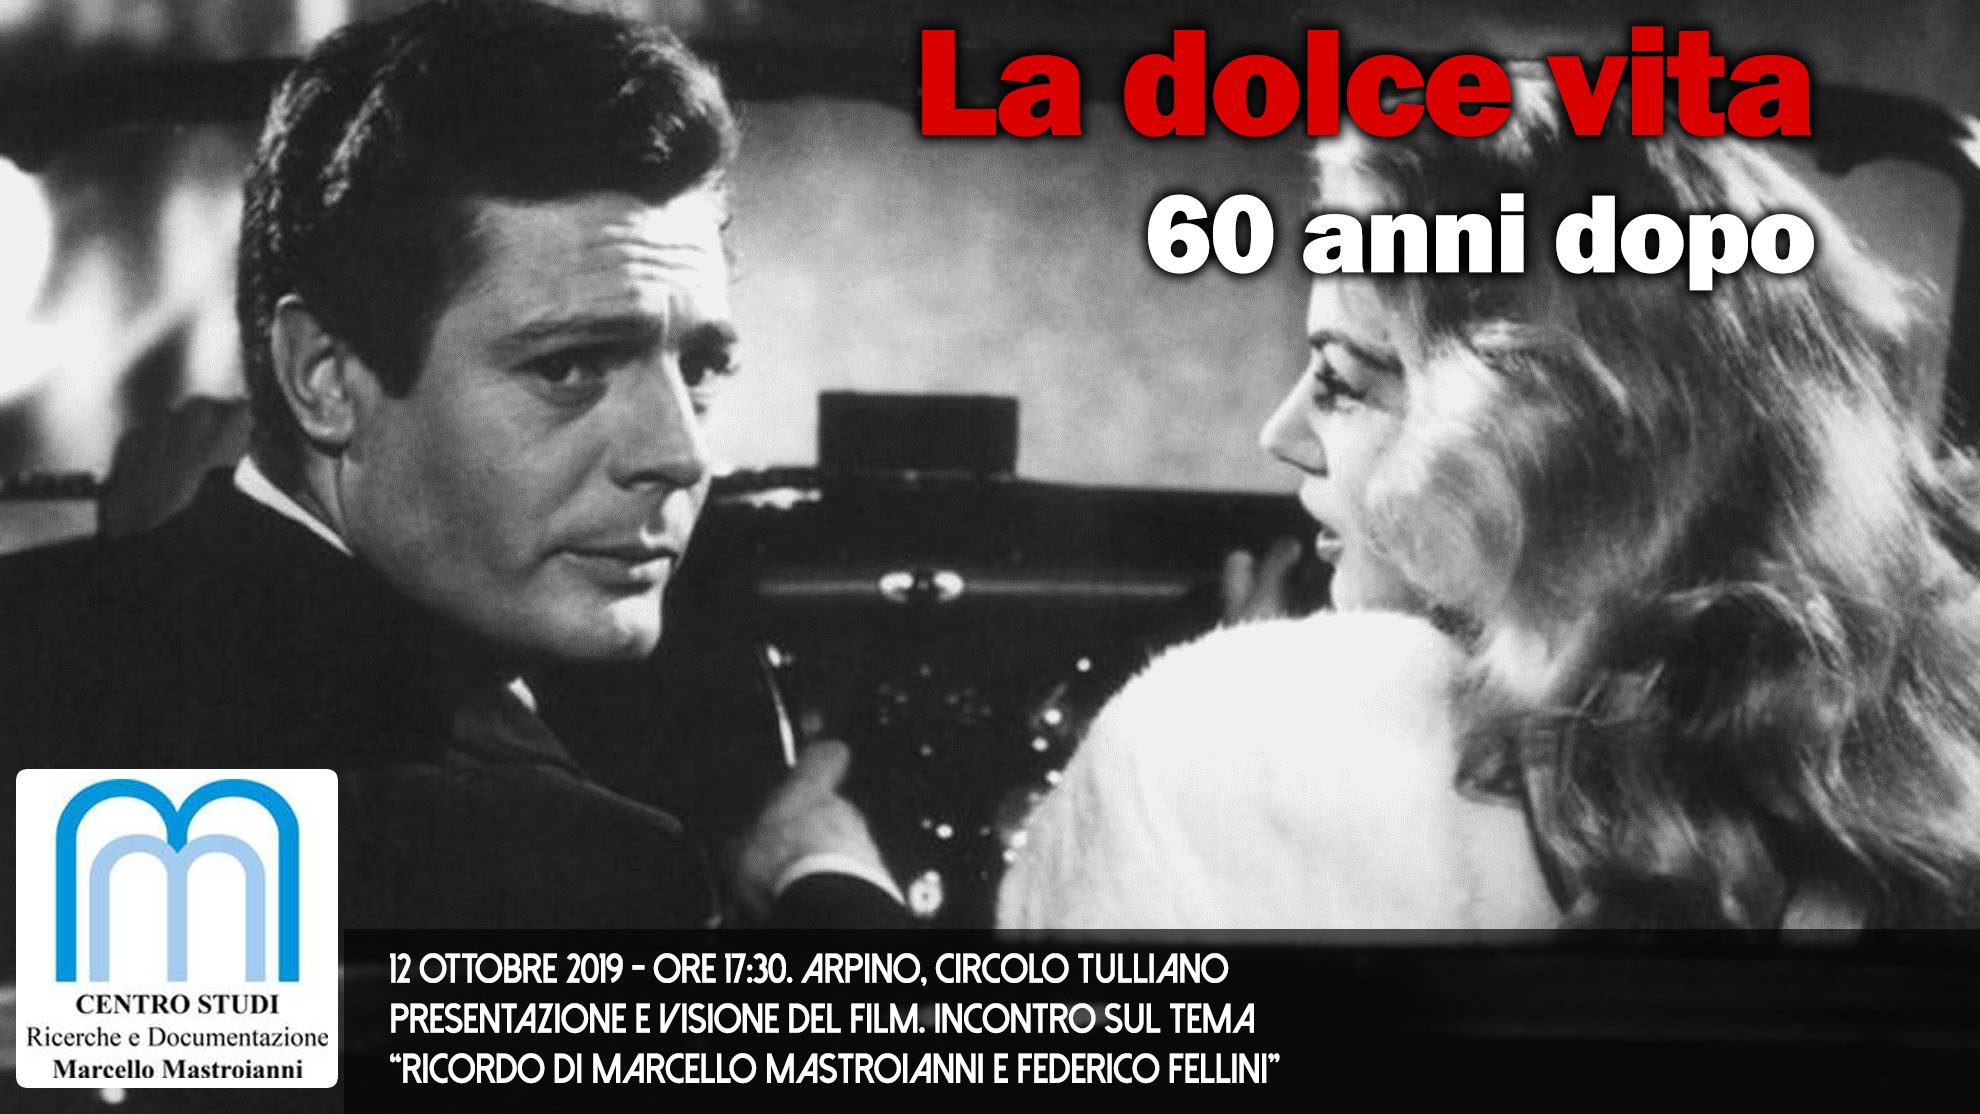 La dolce vita Cinematographe.it 4